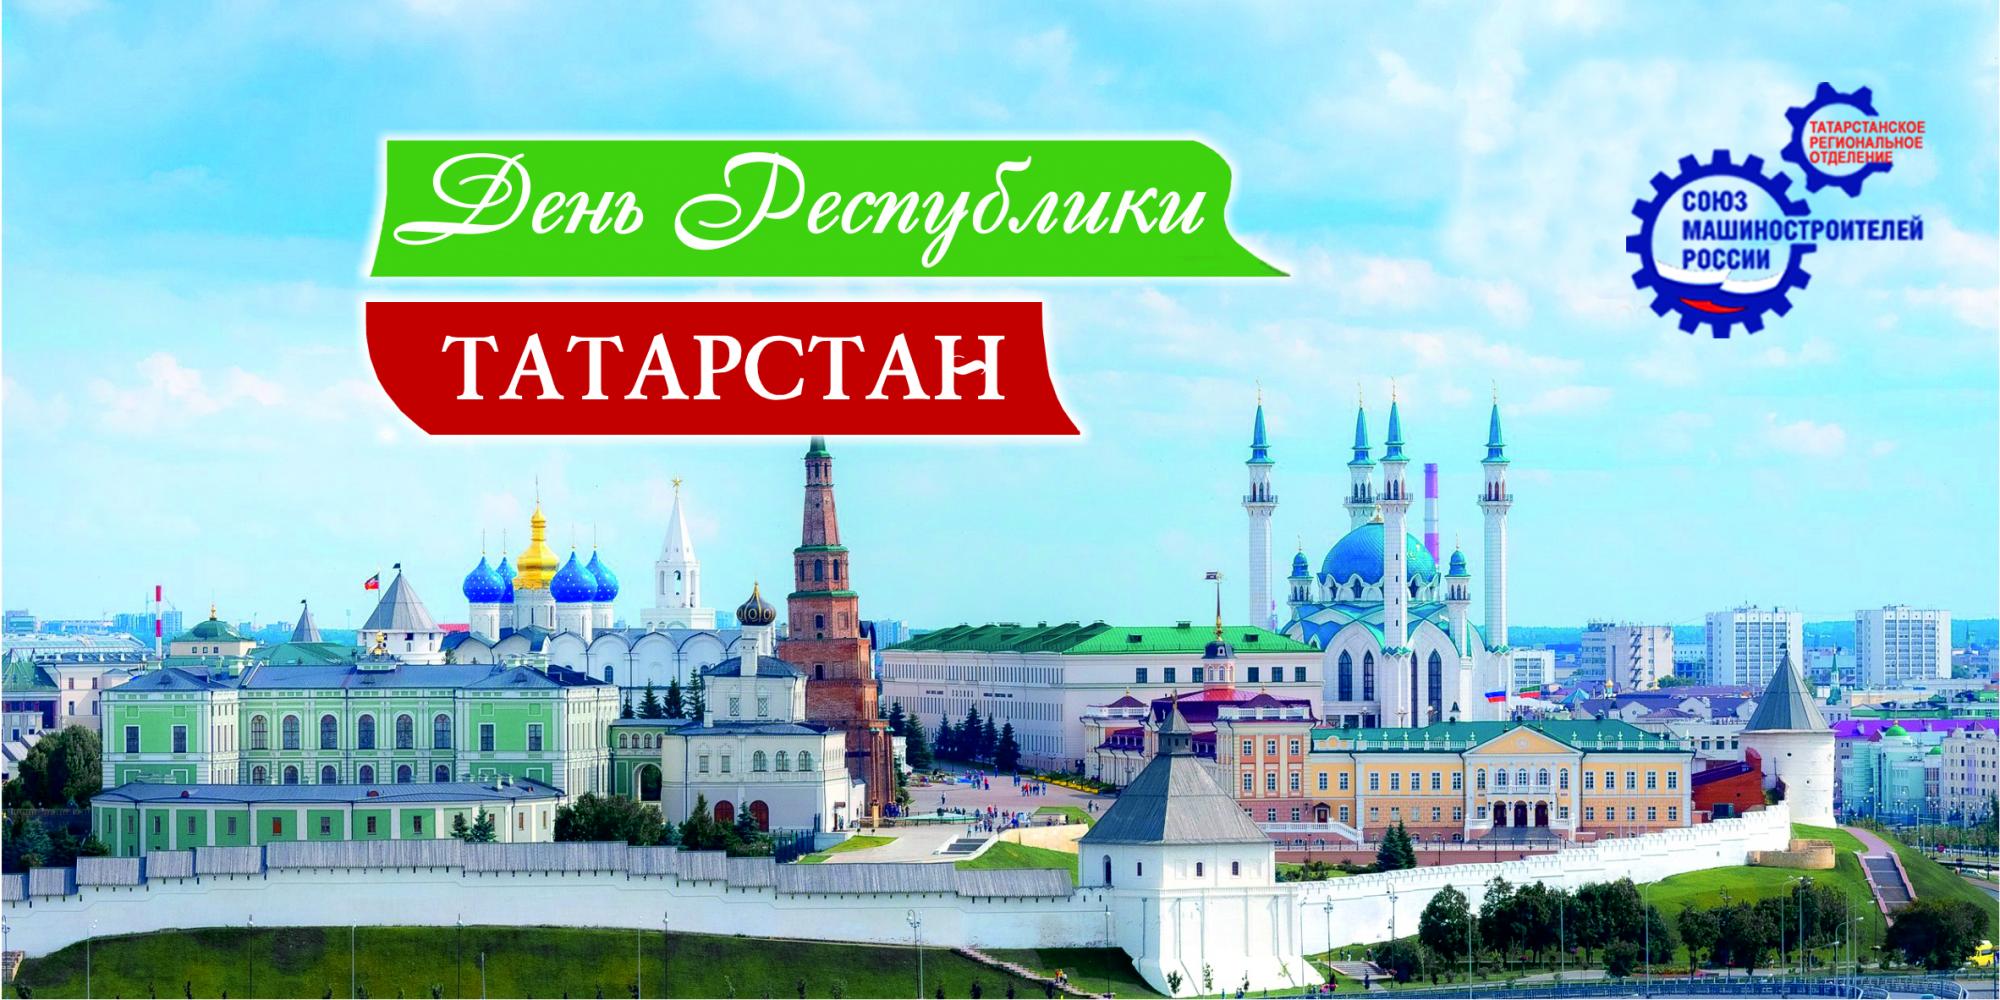 Поздравление Р.Ш.Хасанова с Днем Республики Татарстан!